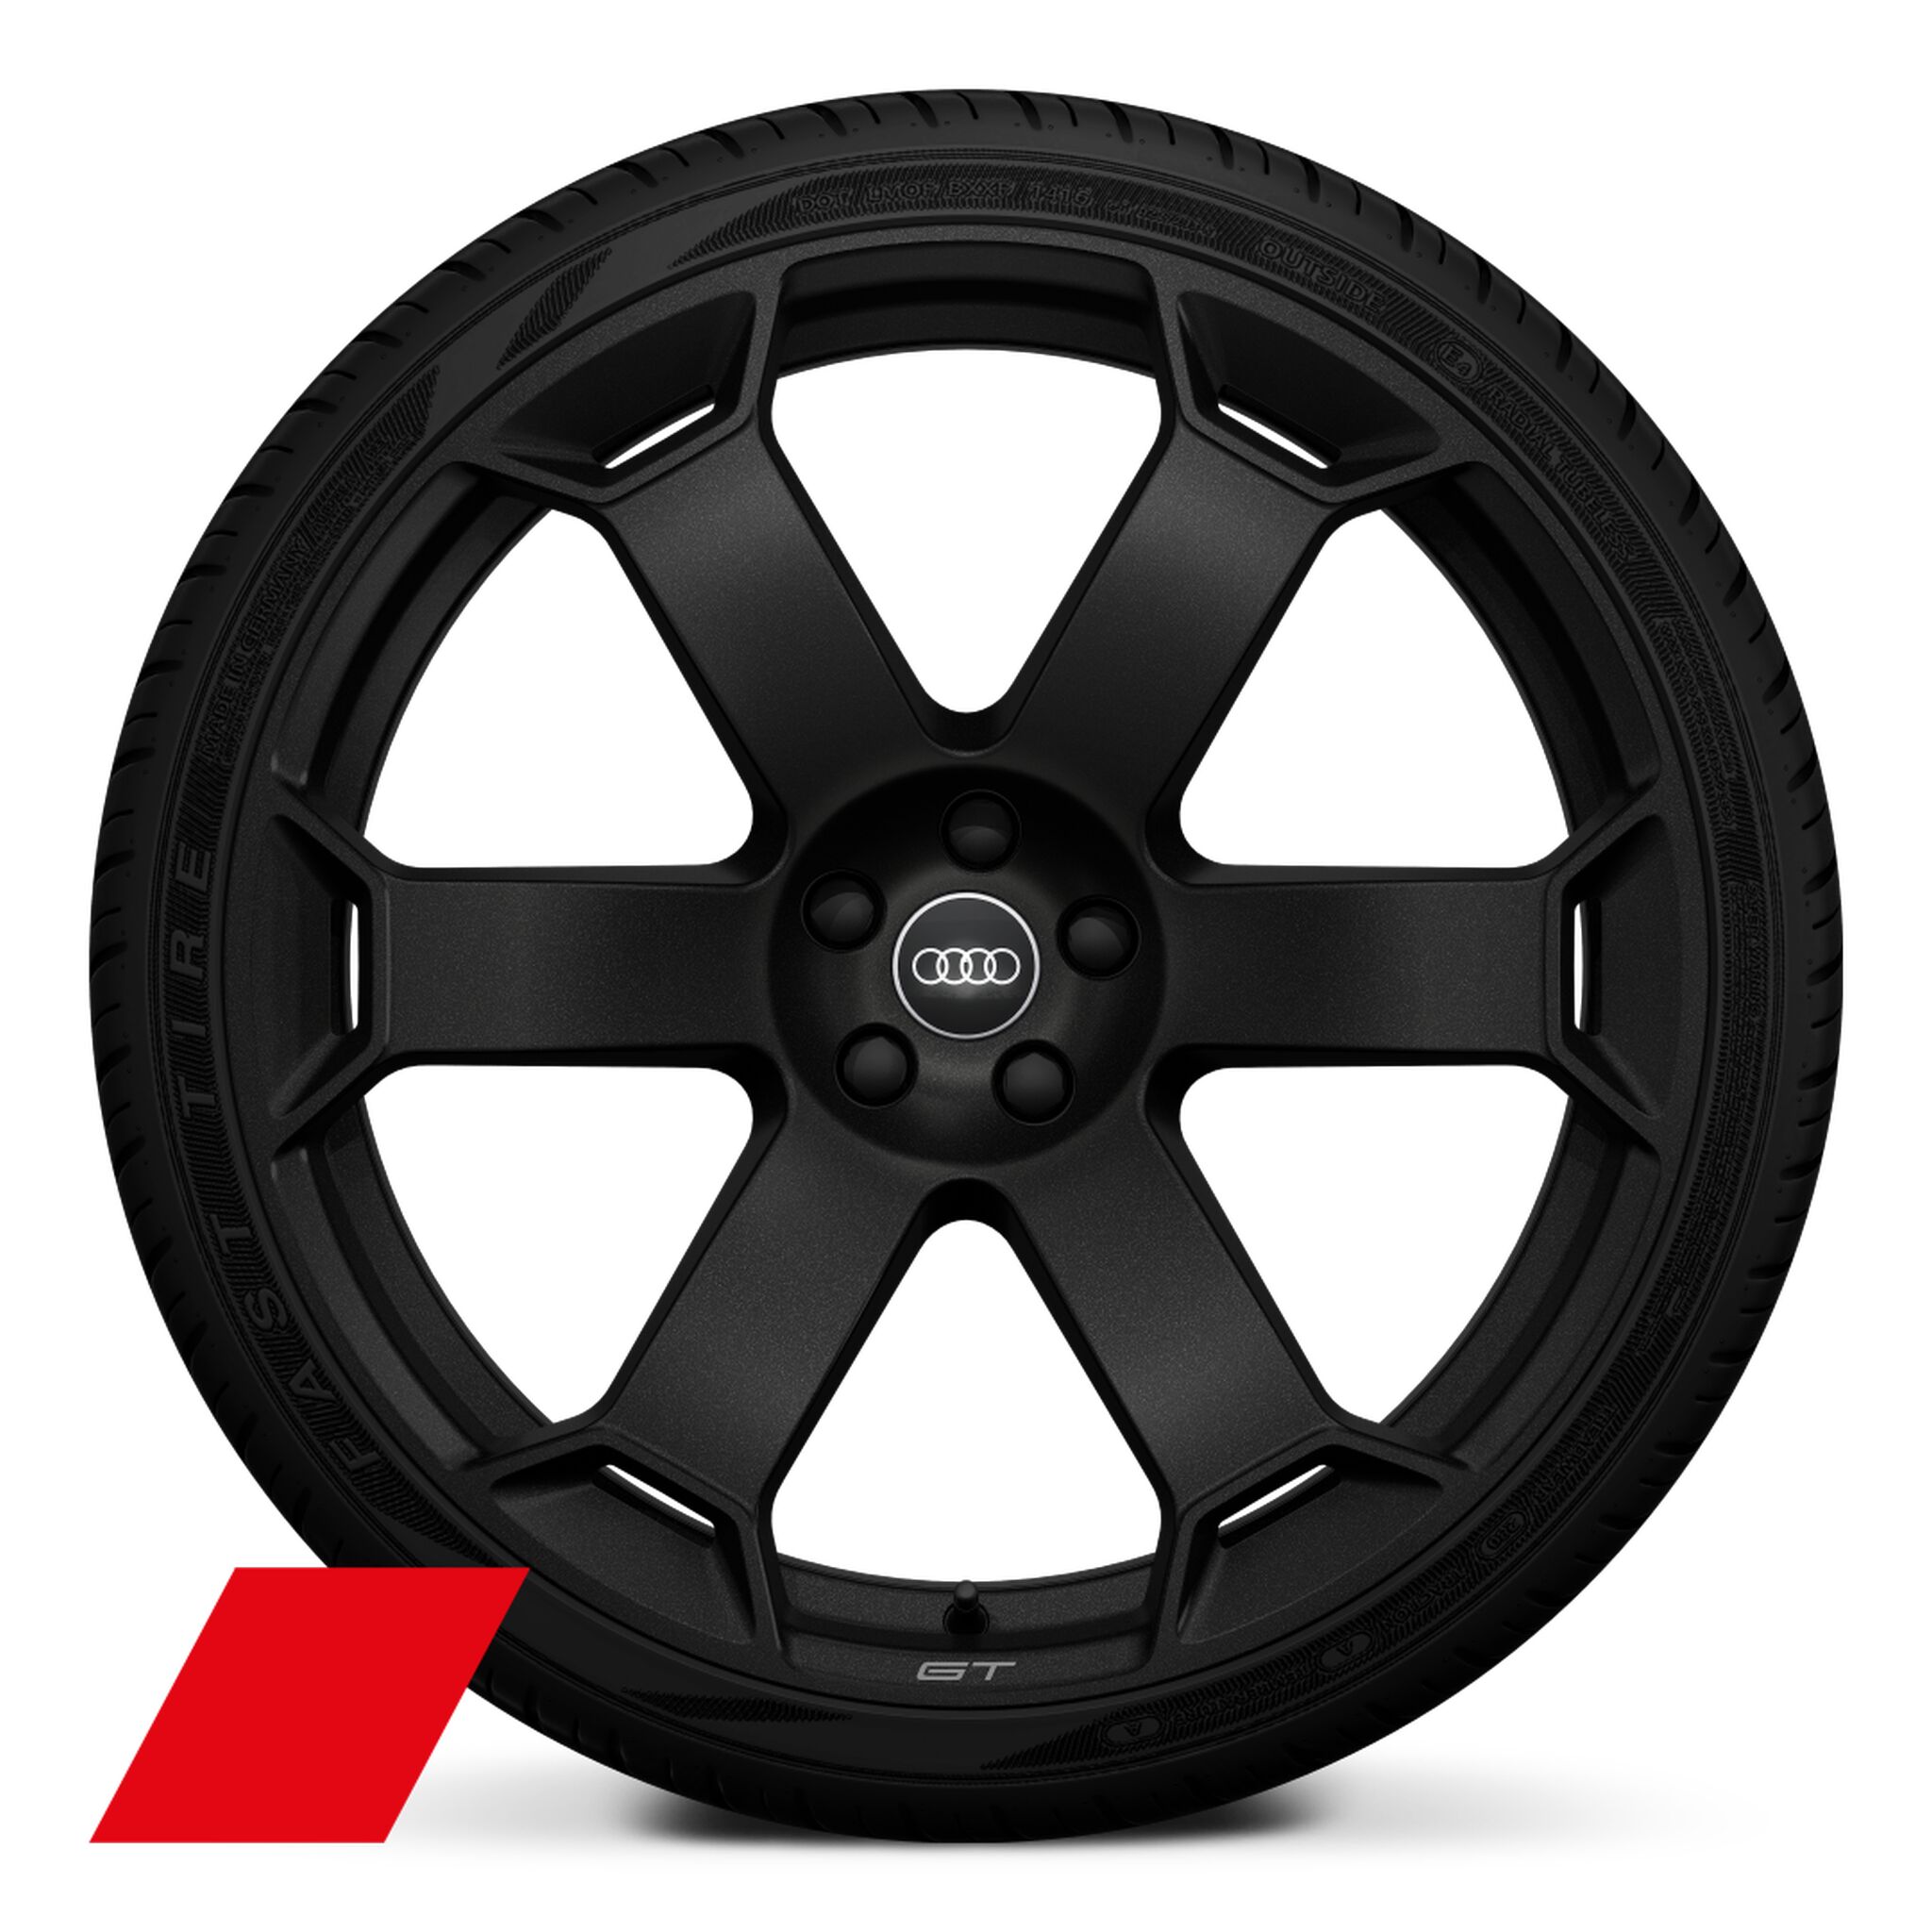 Wheels, 6-arm style, Matte Black, 10.5J x 22, 285/30 R22 tires